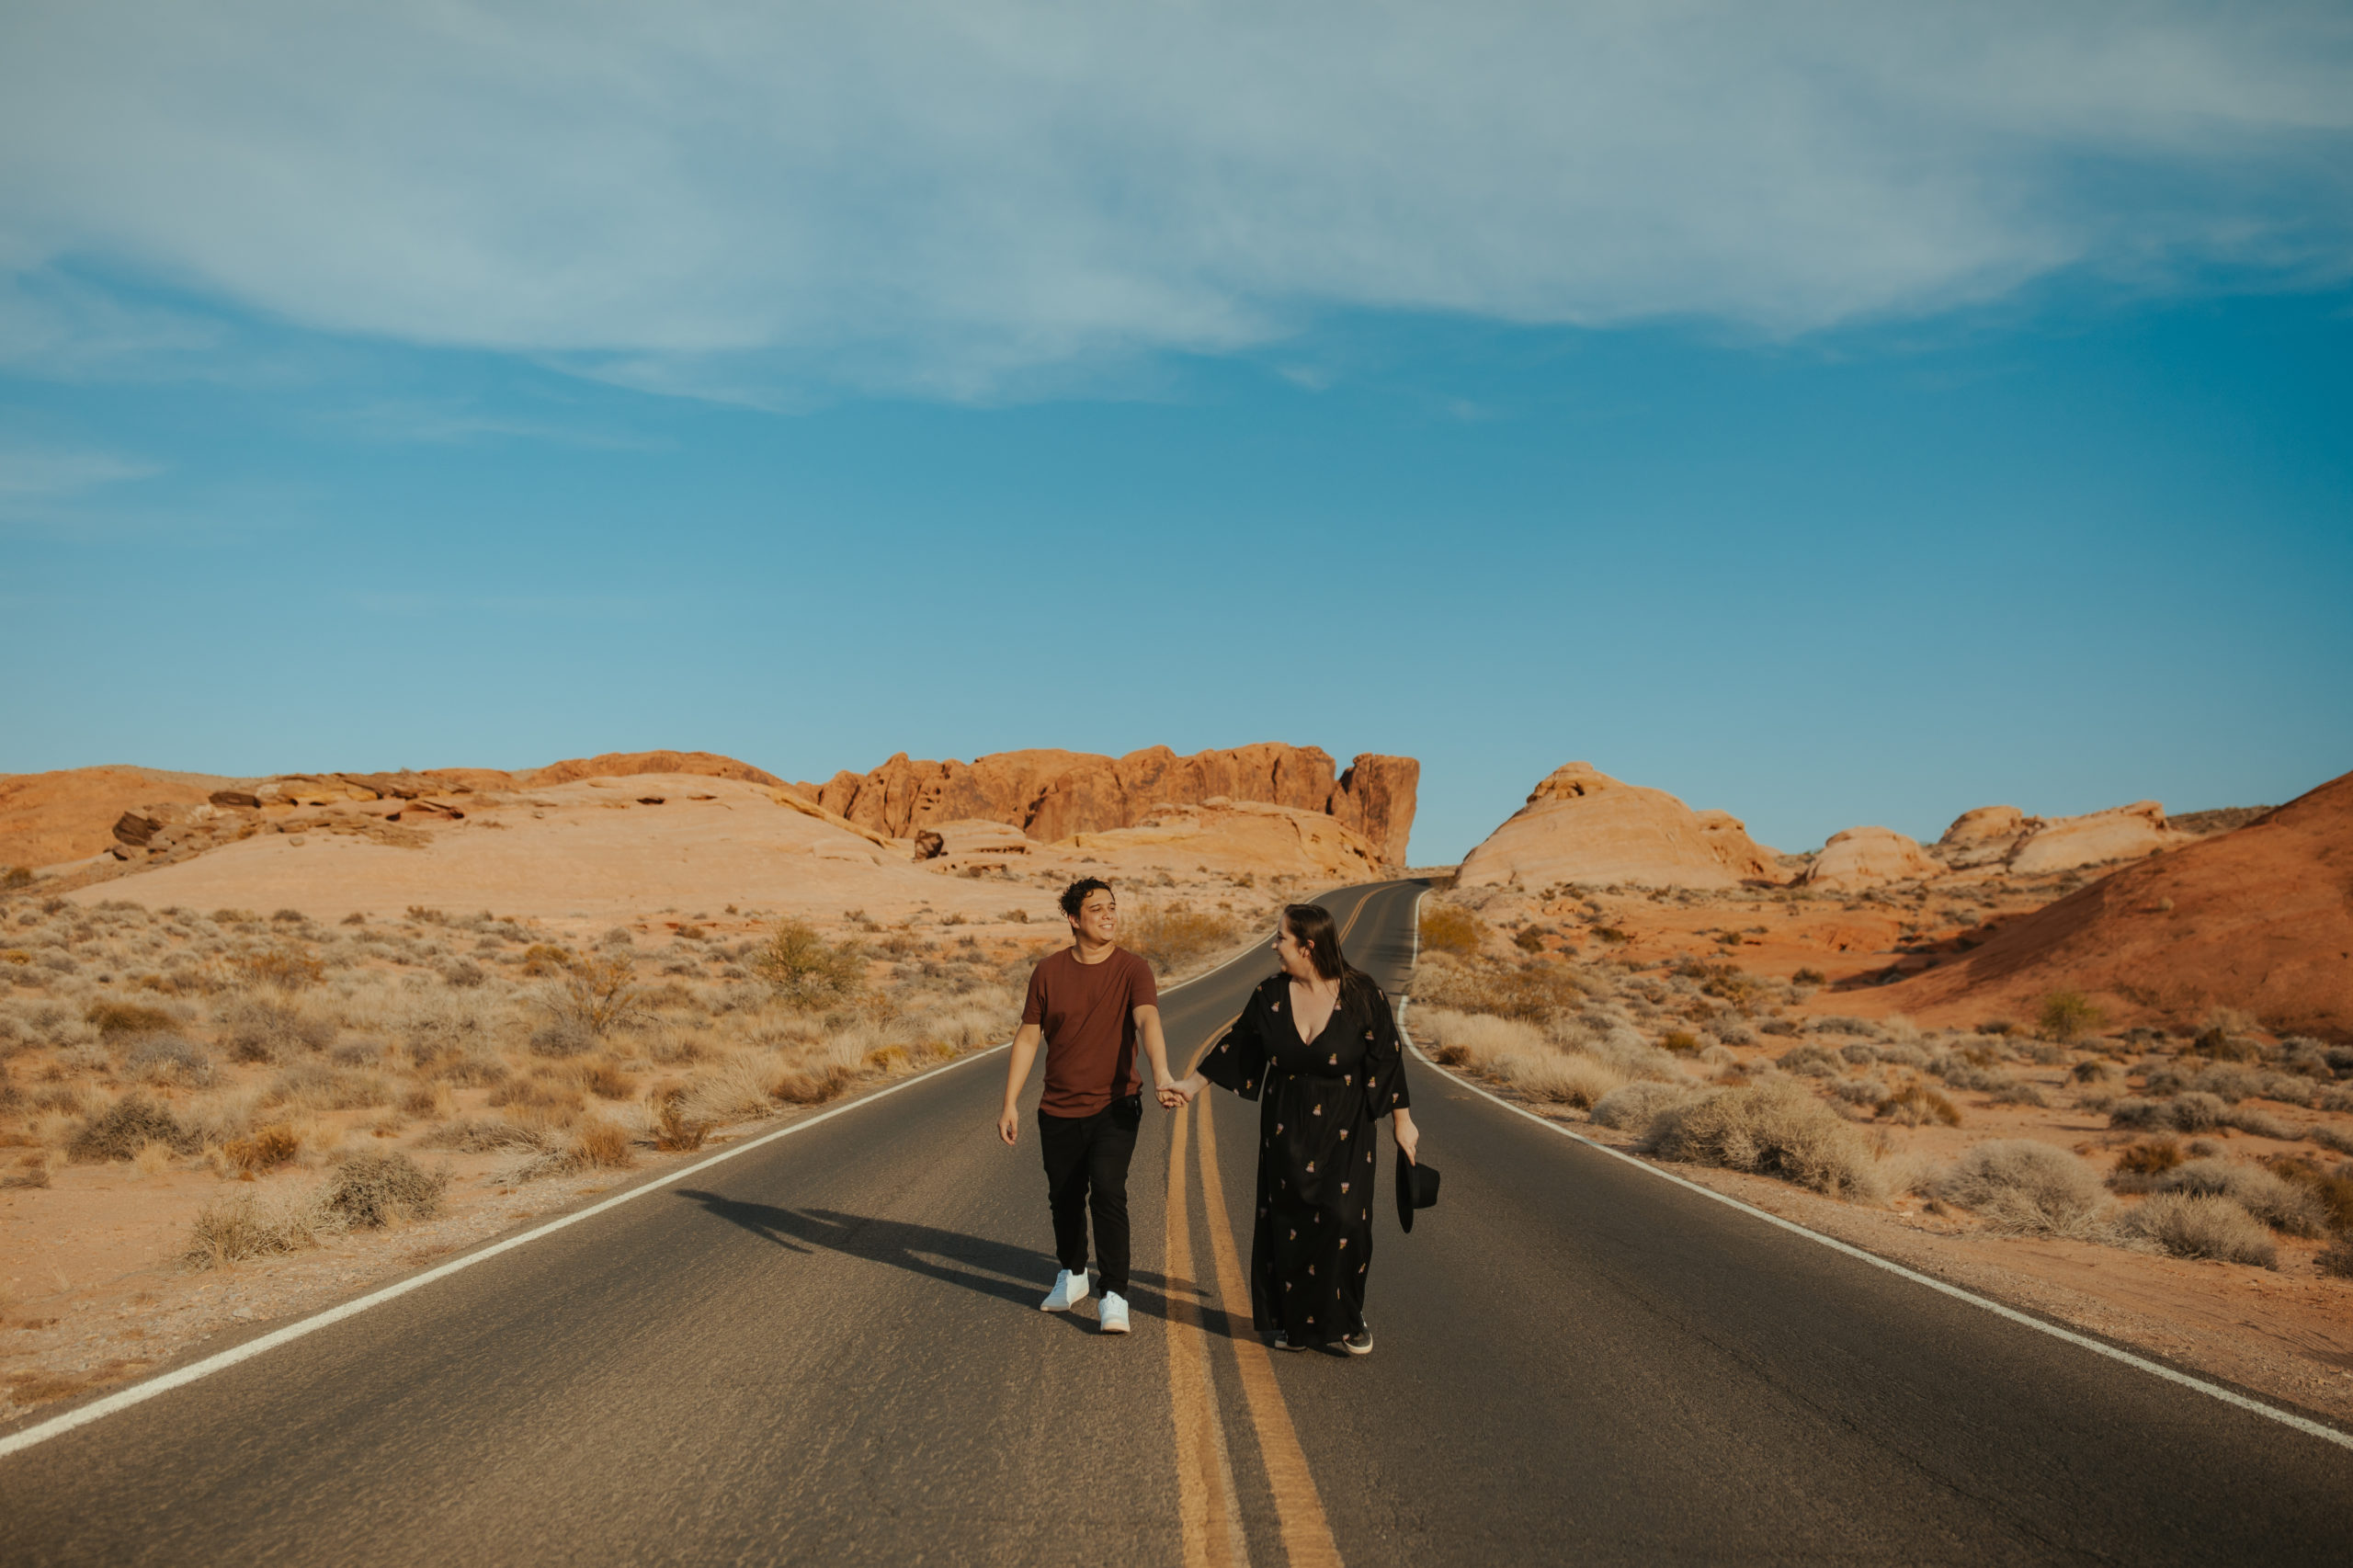 Boyfriend and girlfriend walking down a dirt road in the desert